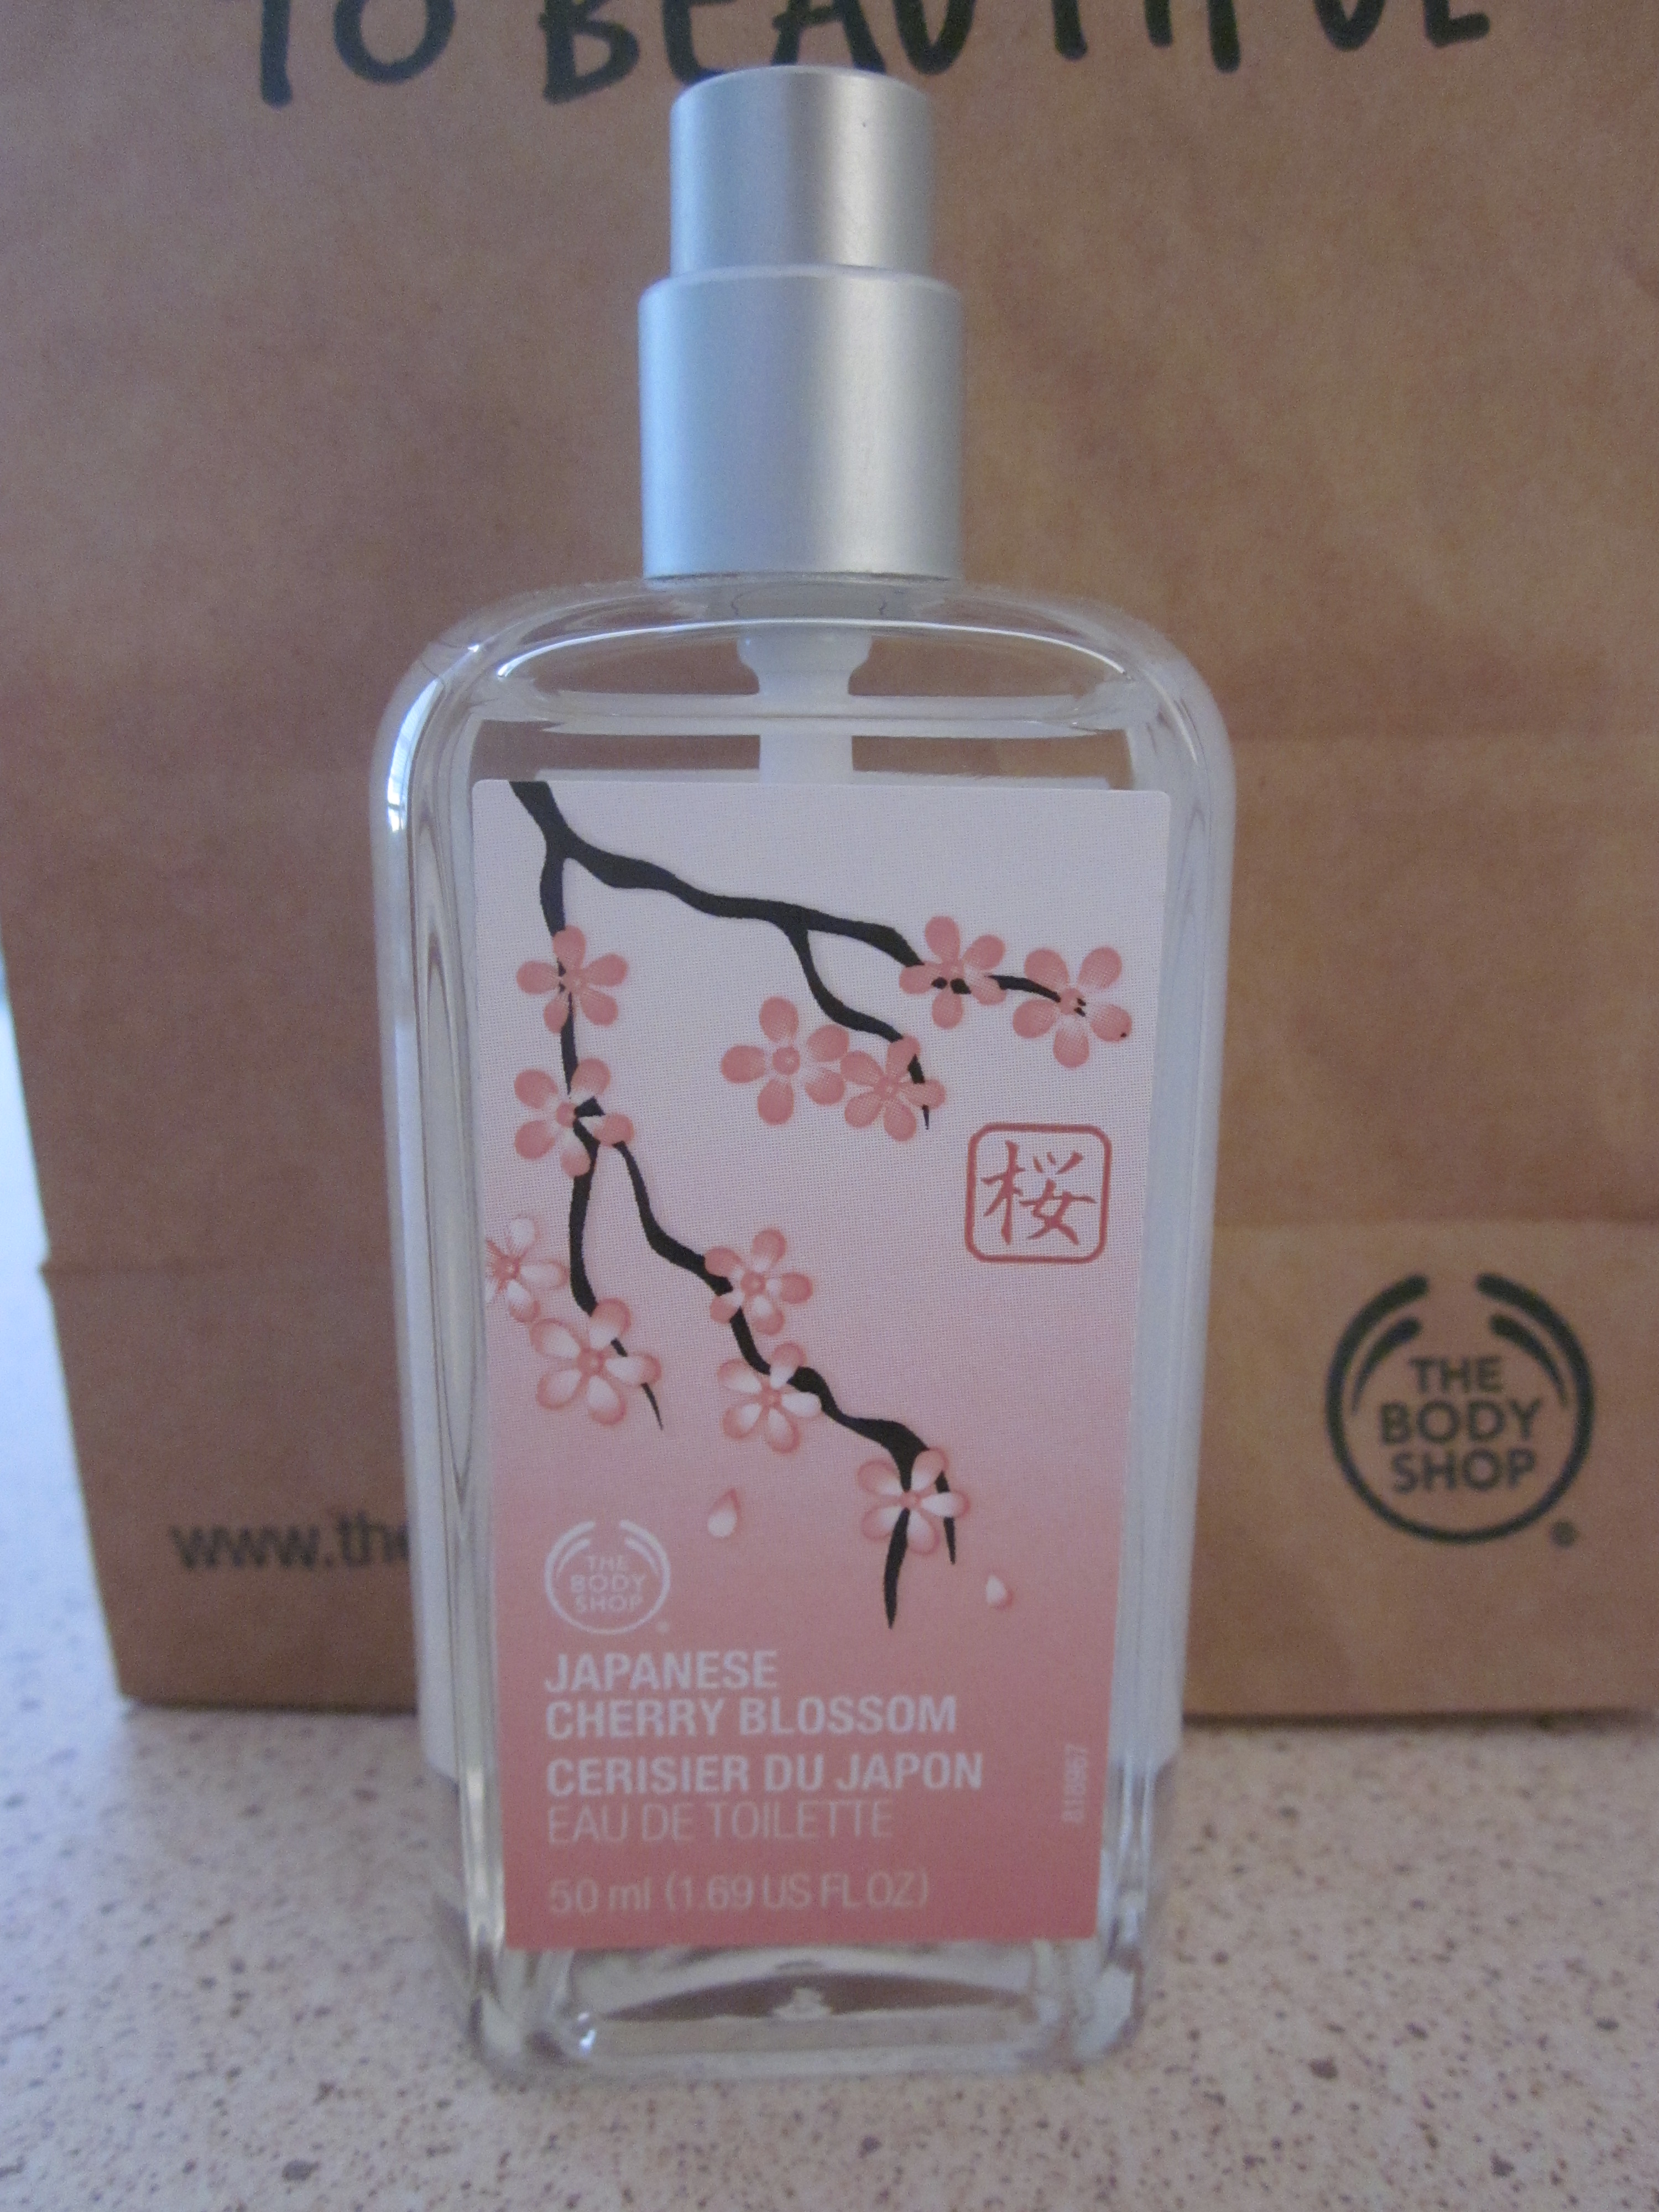 The Body Shop Japanese Cherry Blossom eau de toilette a beautiful story